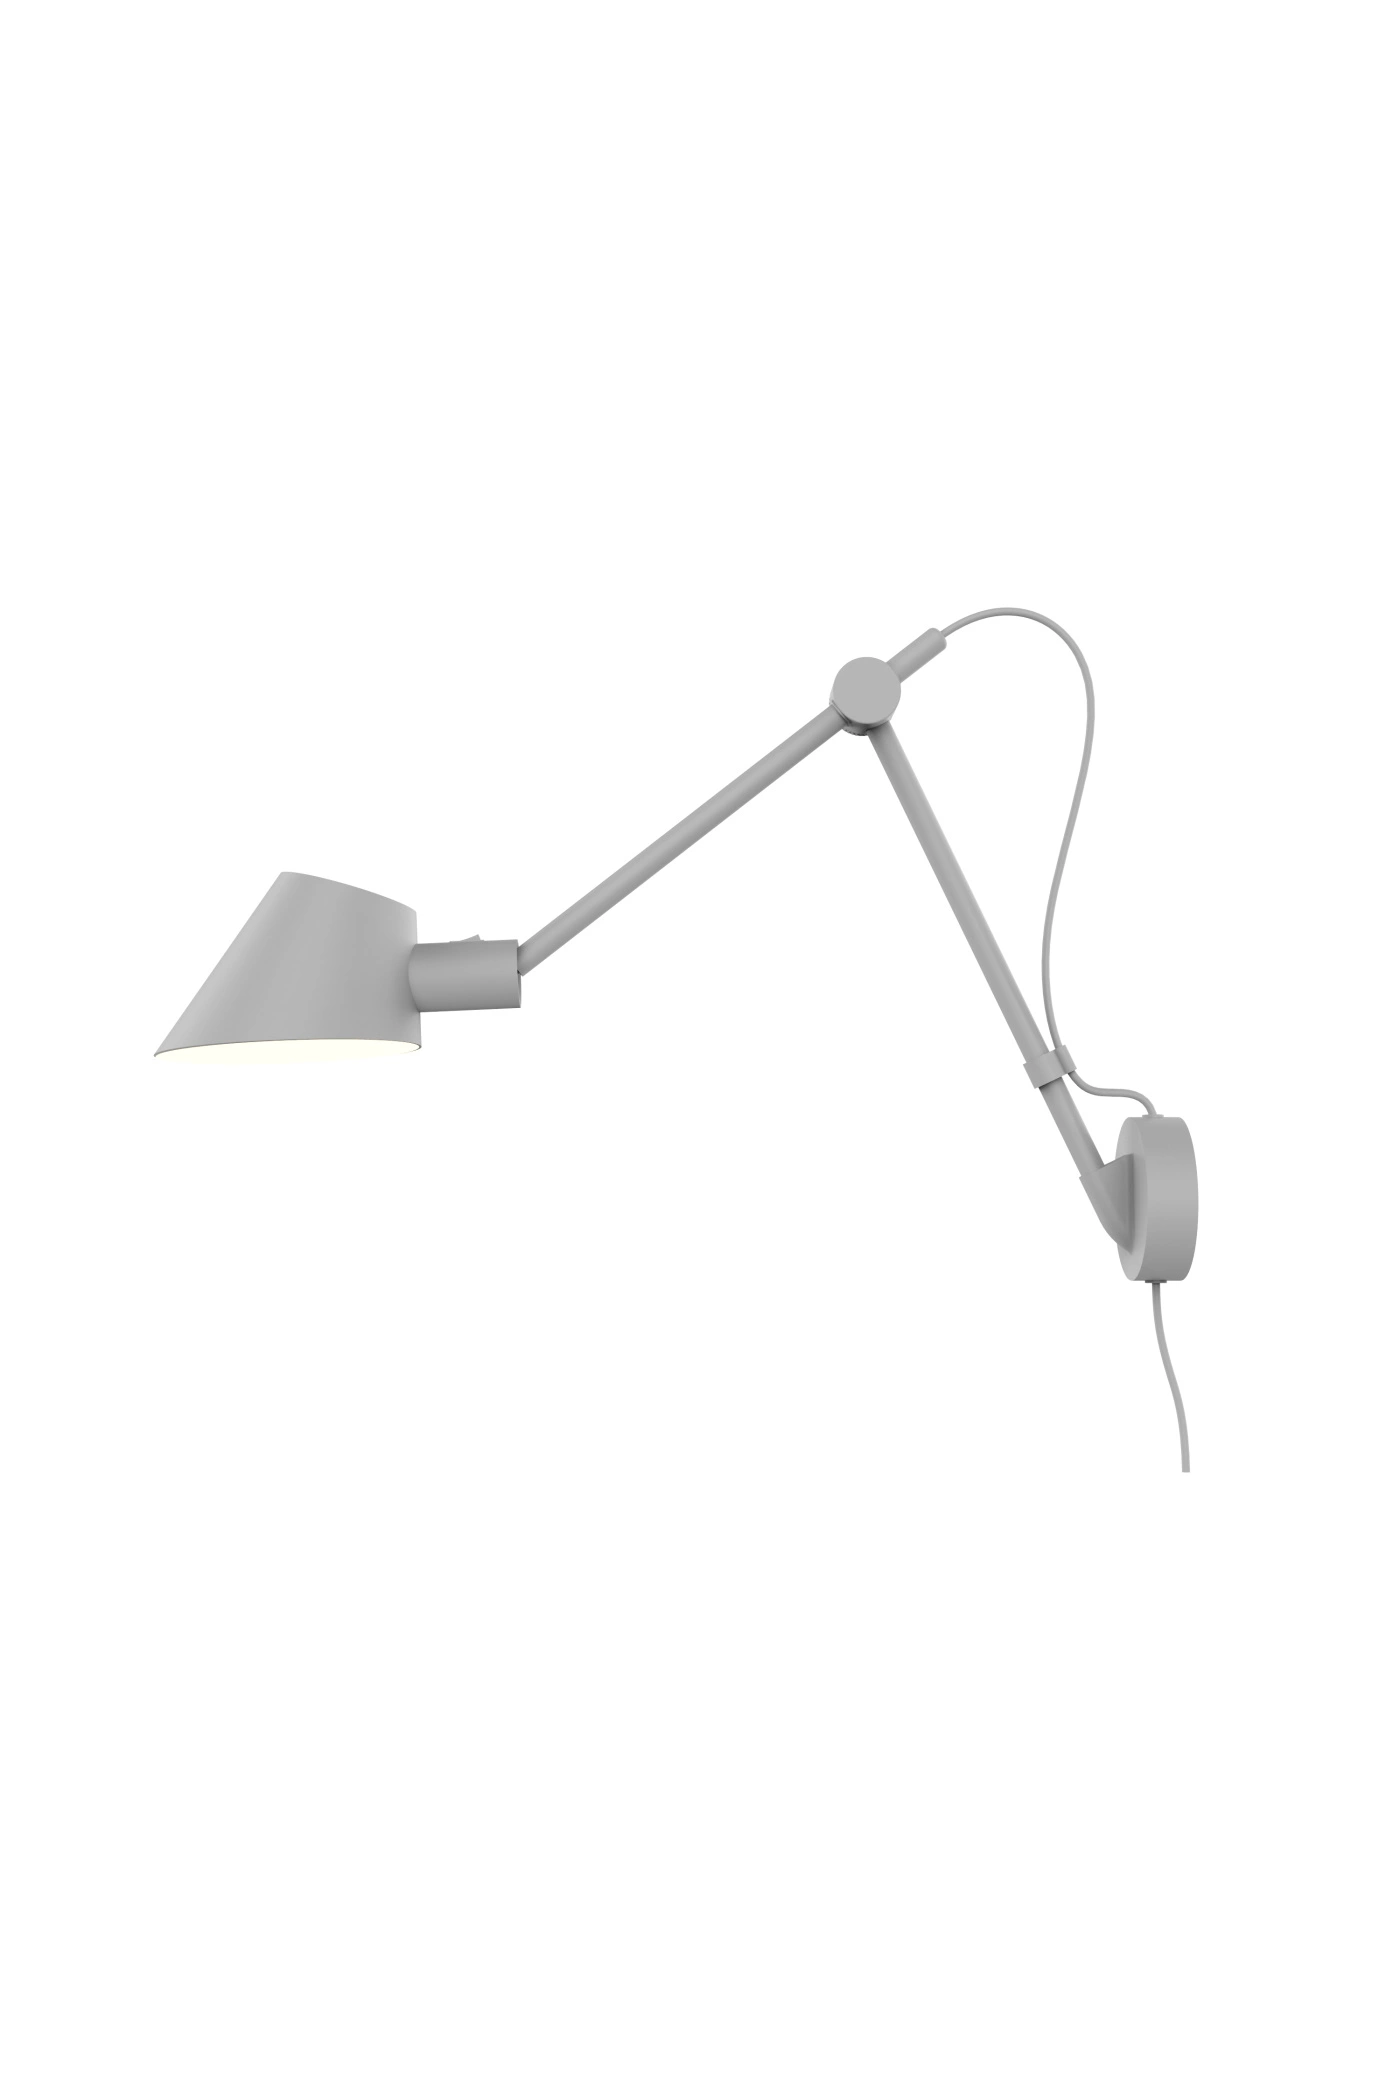   
                        
                        Бра NORDLUX (Дания) 59640    
                         в стиле Хай-тек.  
                        Тип источника света: светодиодная лампа, сменная.                                                 Цвета плафонов и подвесок: Серый.                         Материал: Металл.                          фото 3